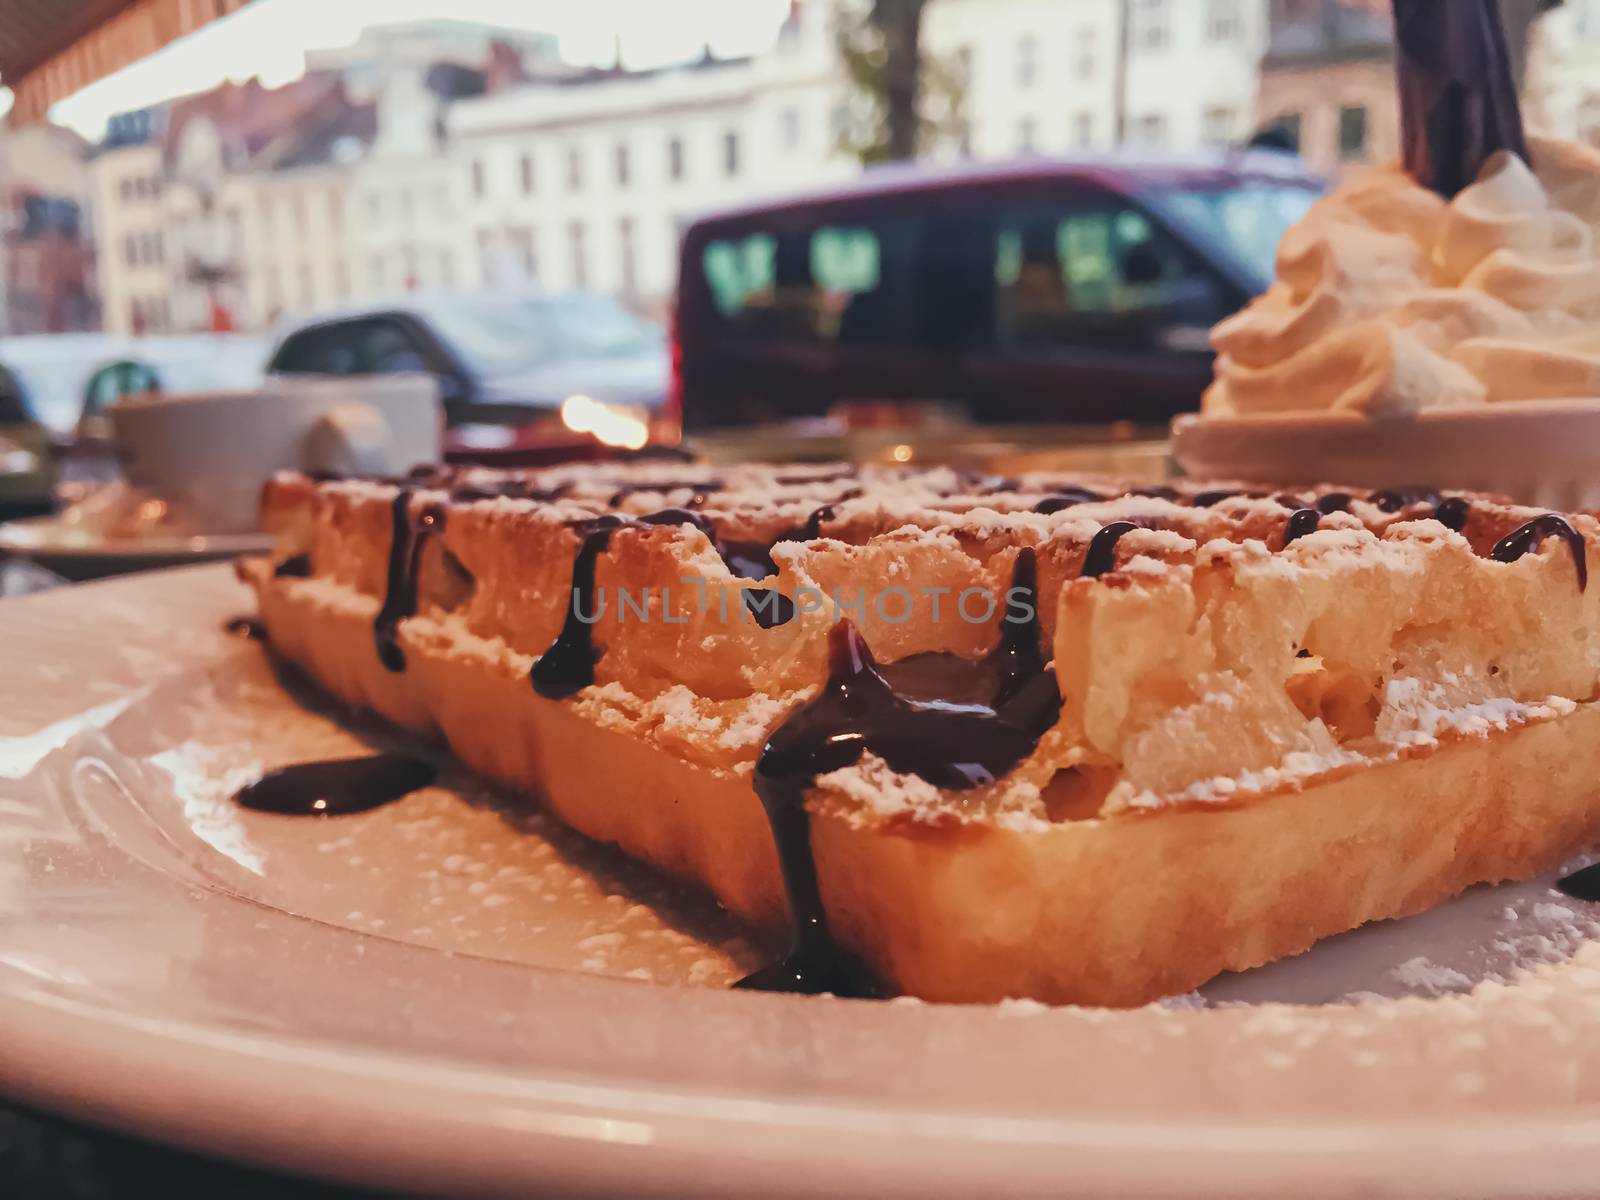 Belgian waffles in a restaurant by Anneleven